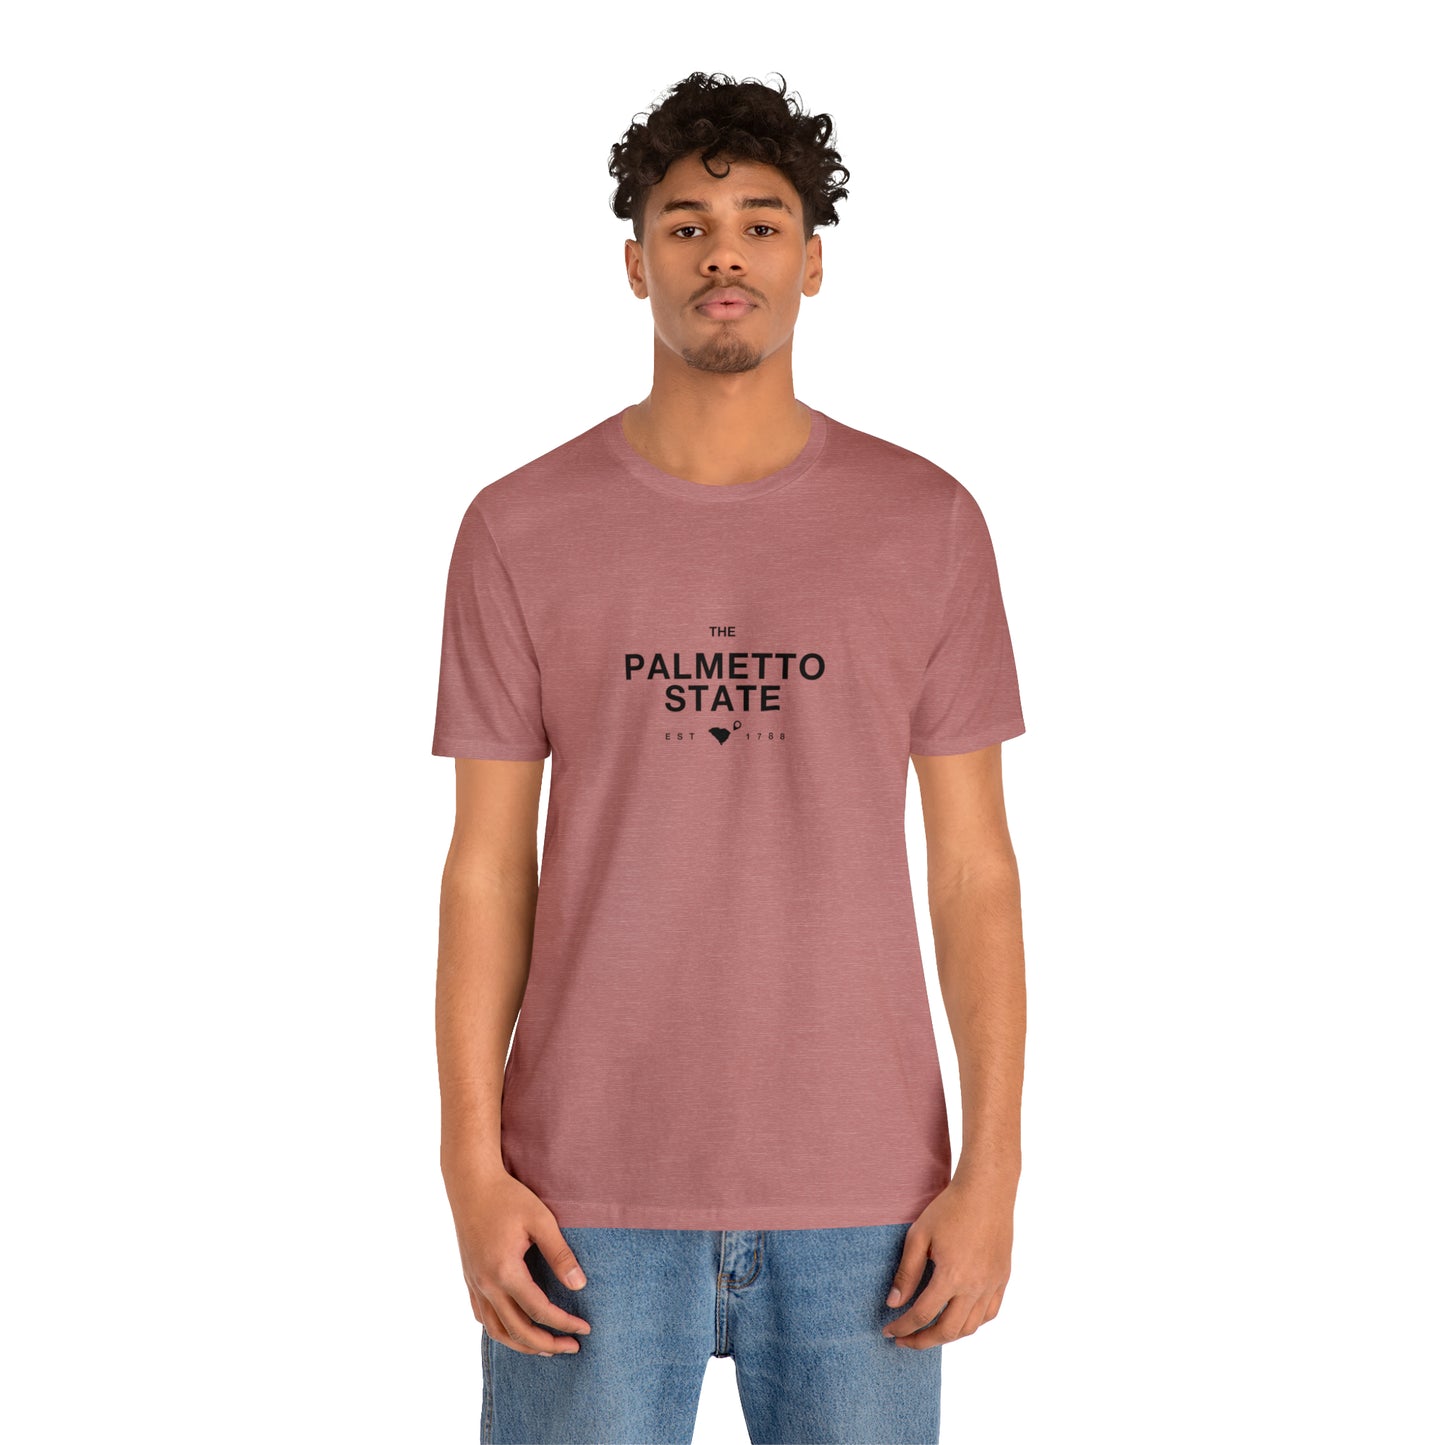 South Carolina Nickname Shirt